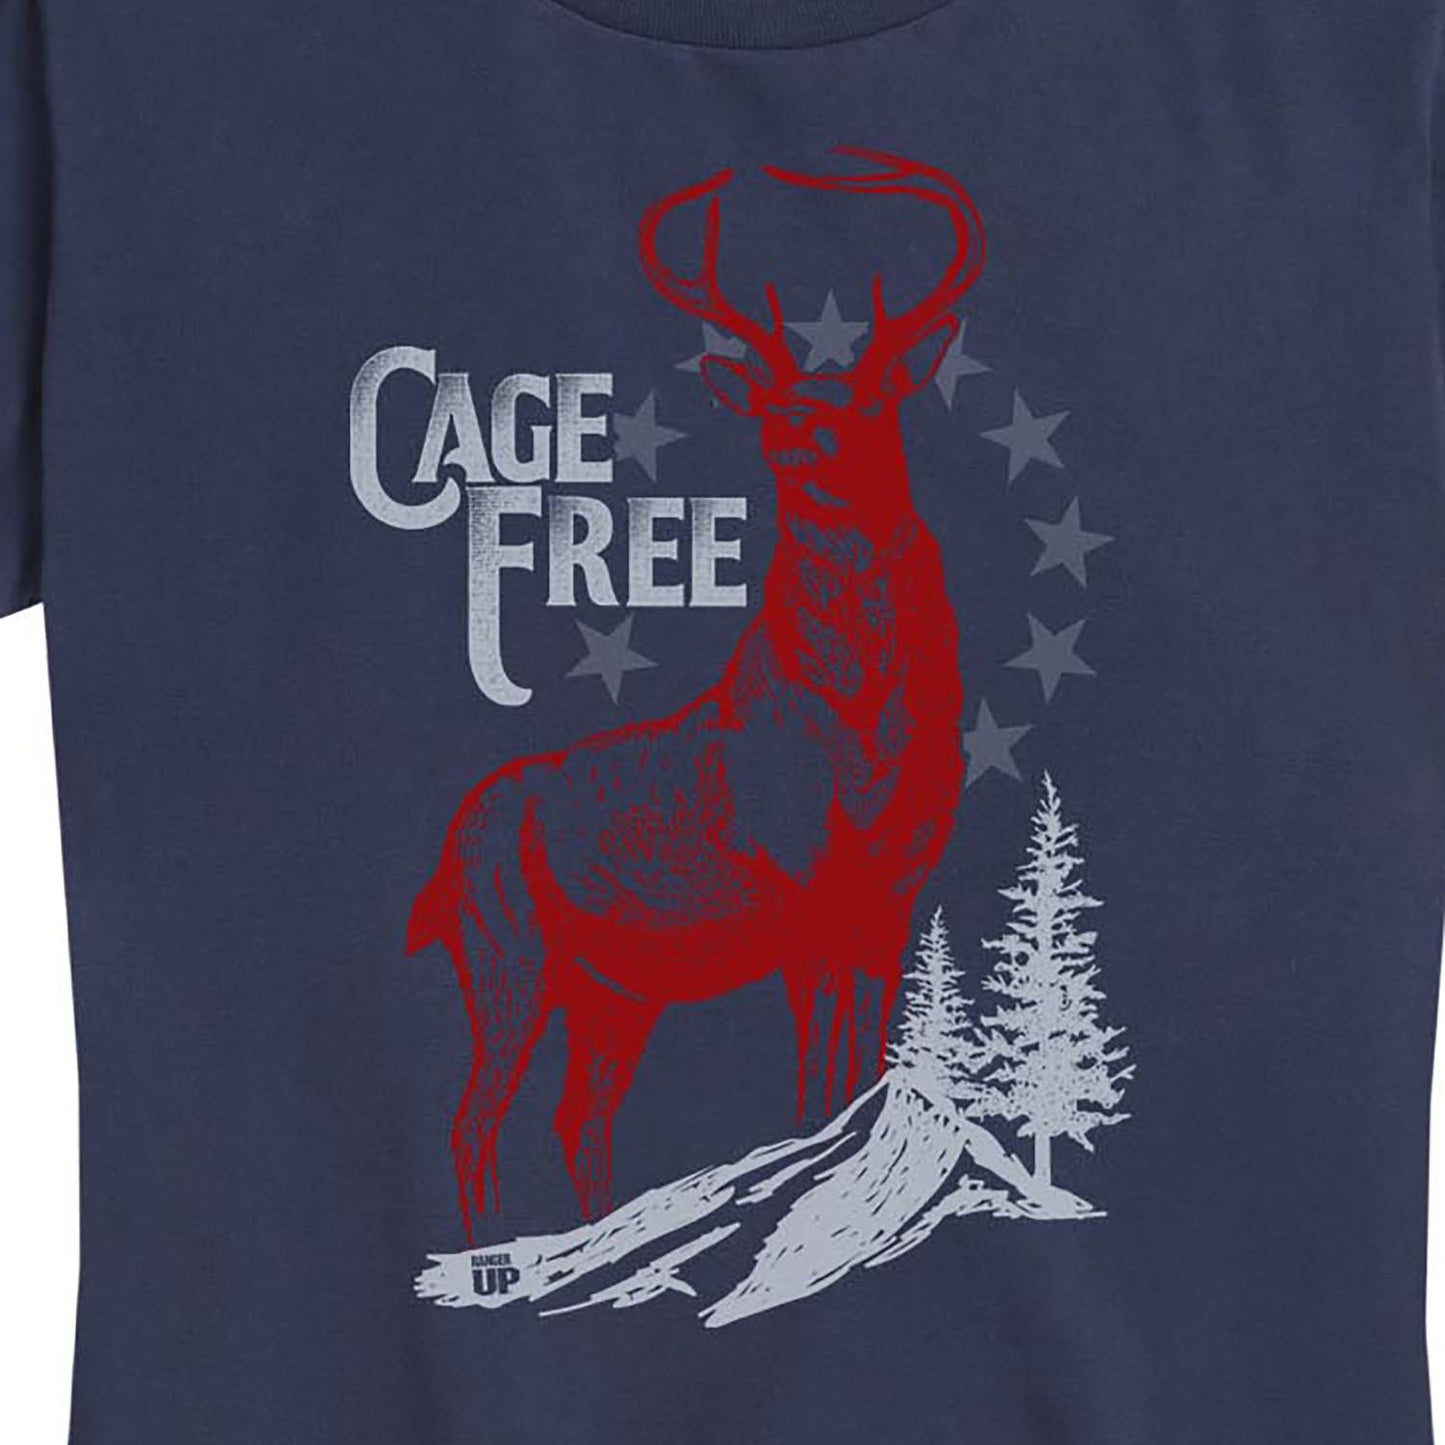 Women's Cage Free Deer Tee